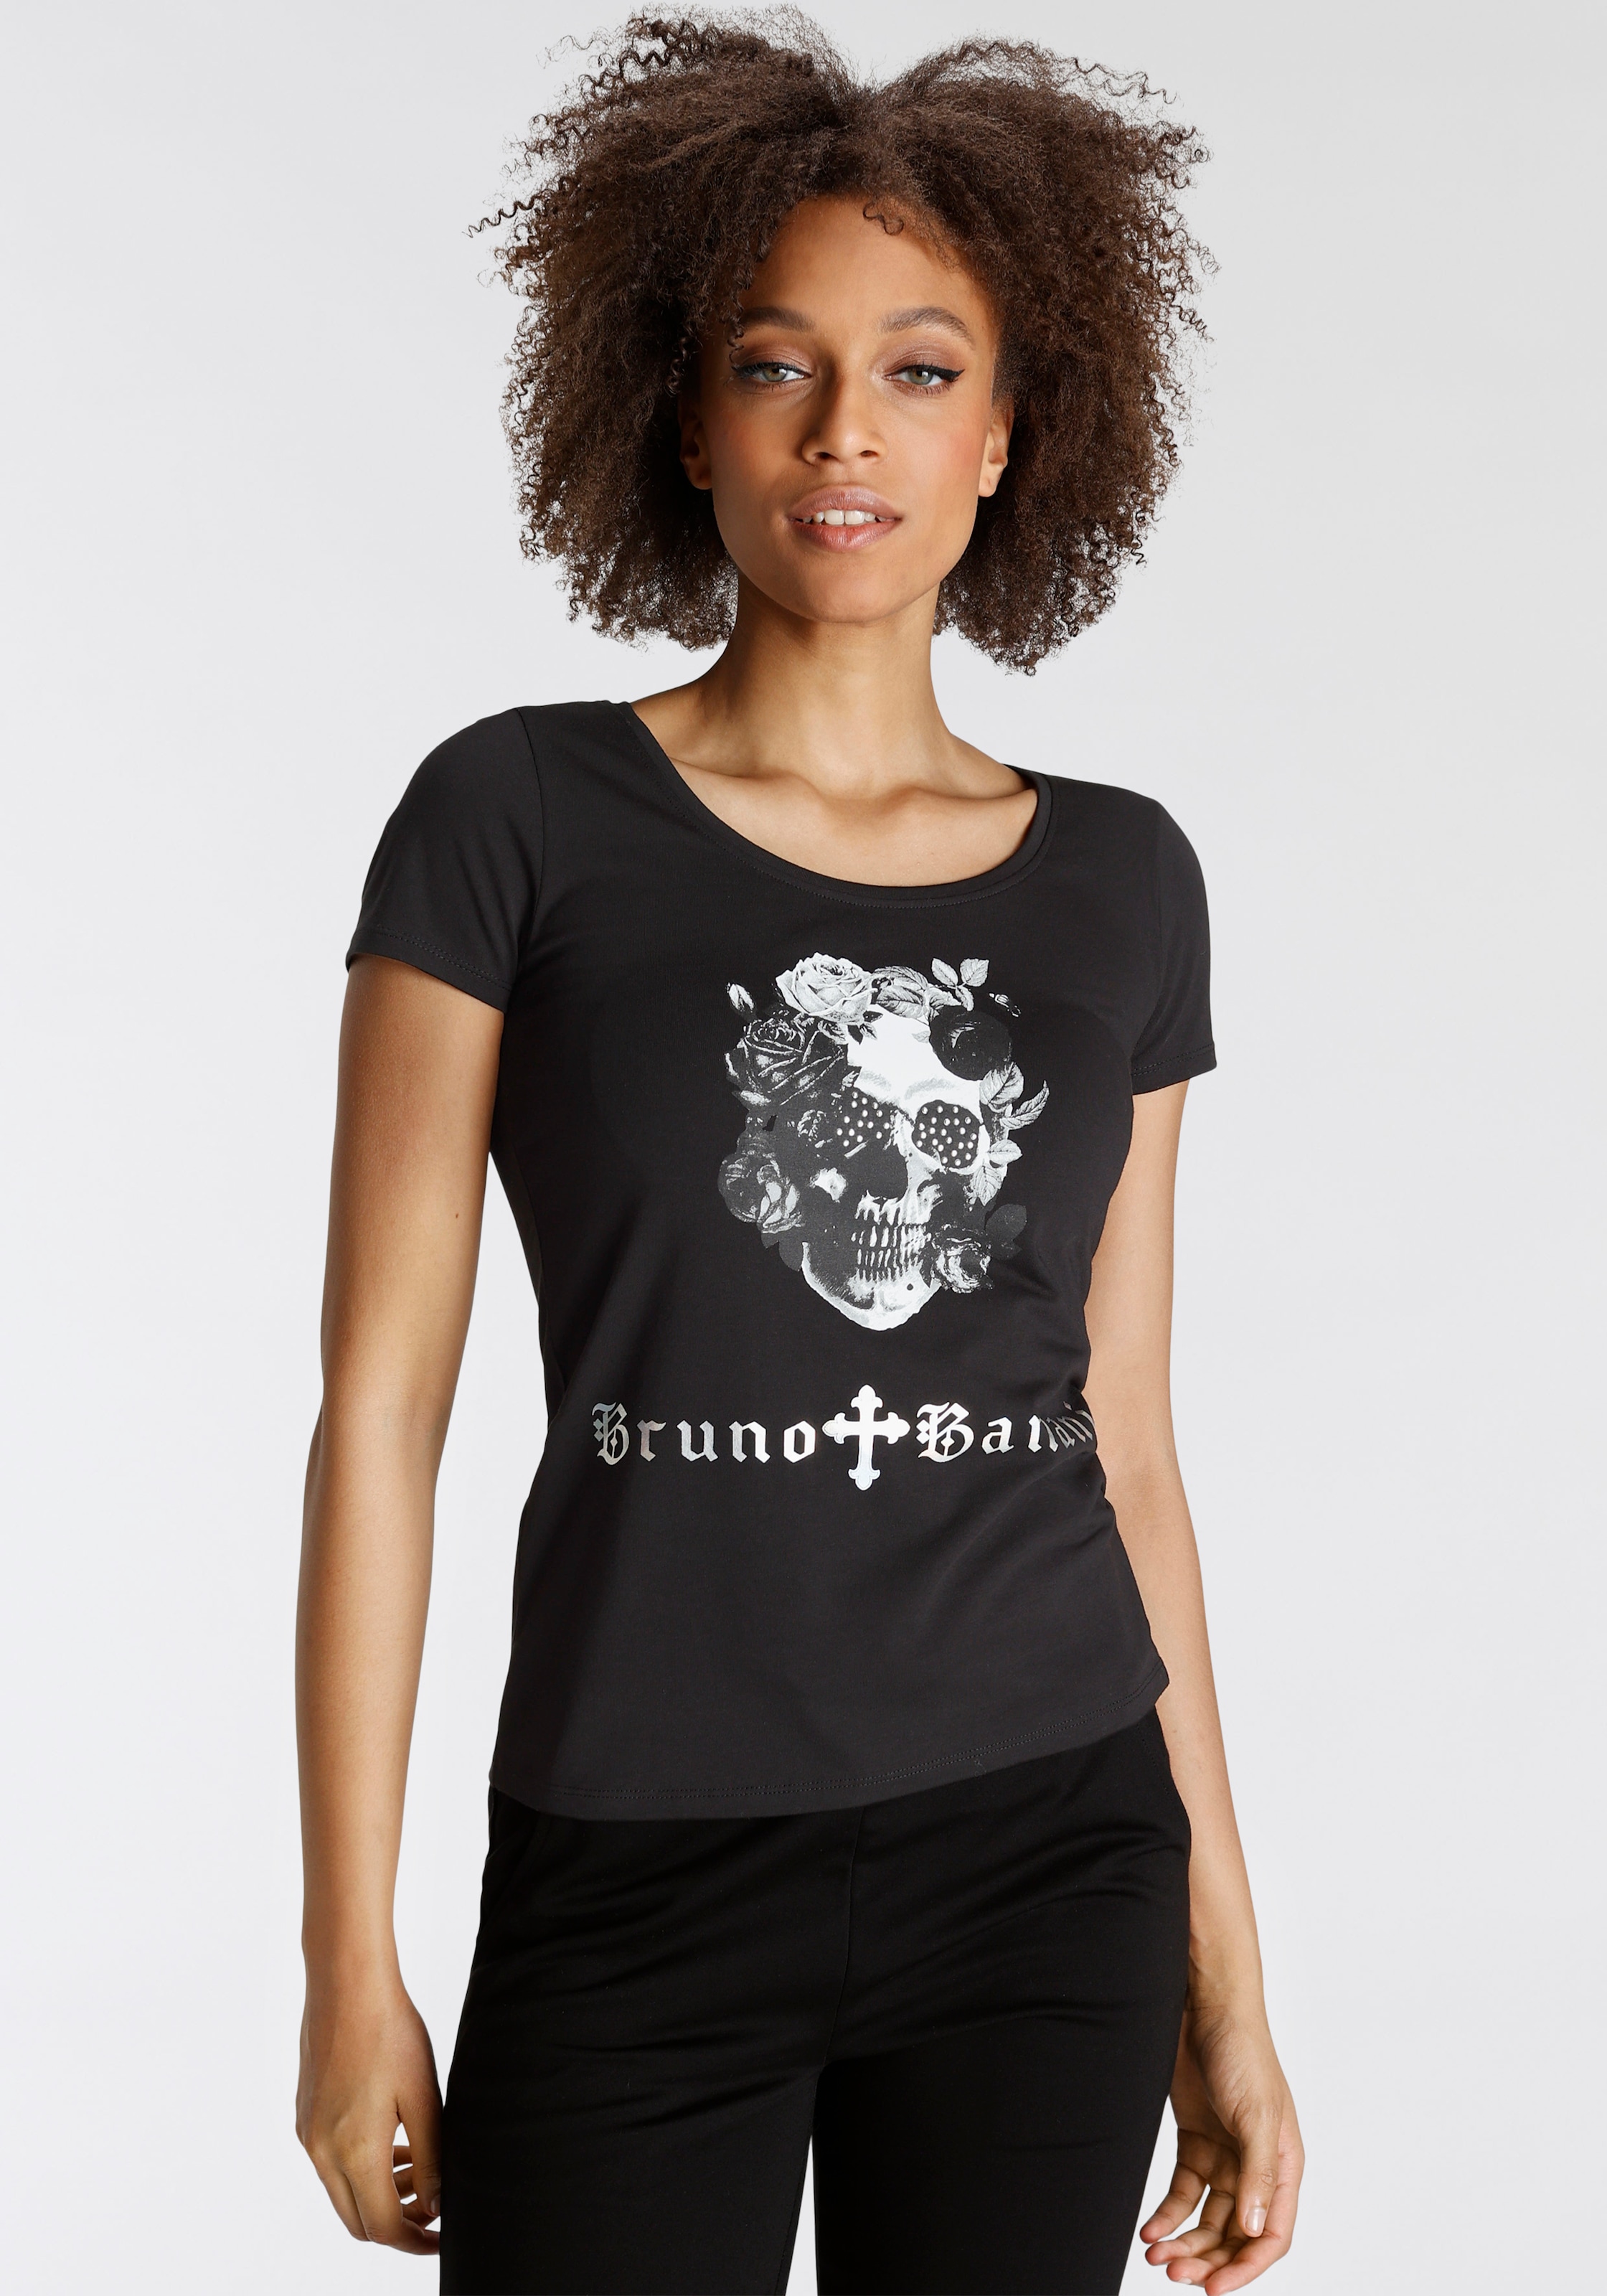 Bruno Banani T-Shirt, mit coolem Print